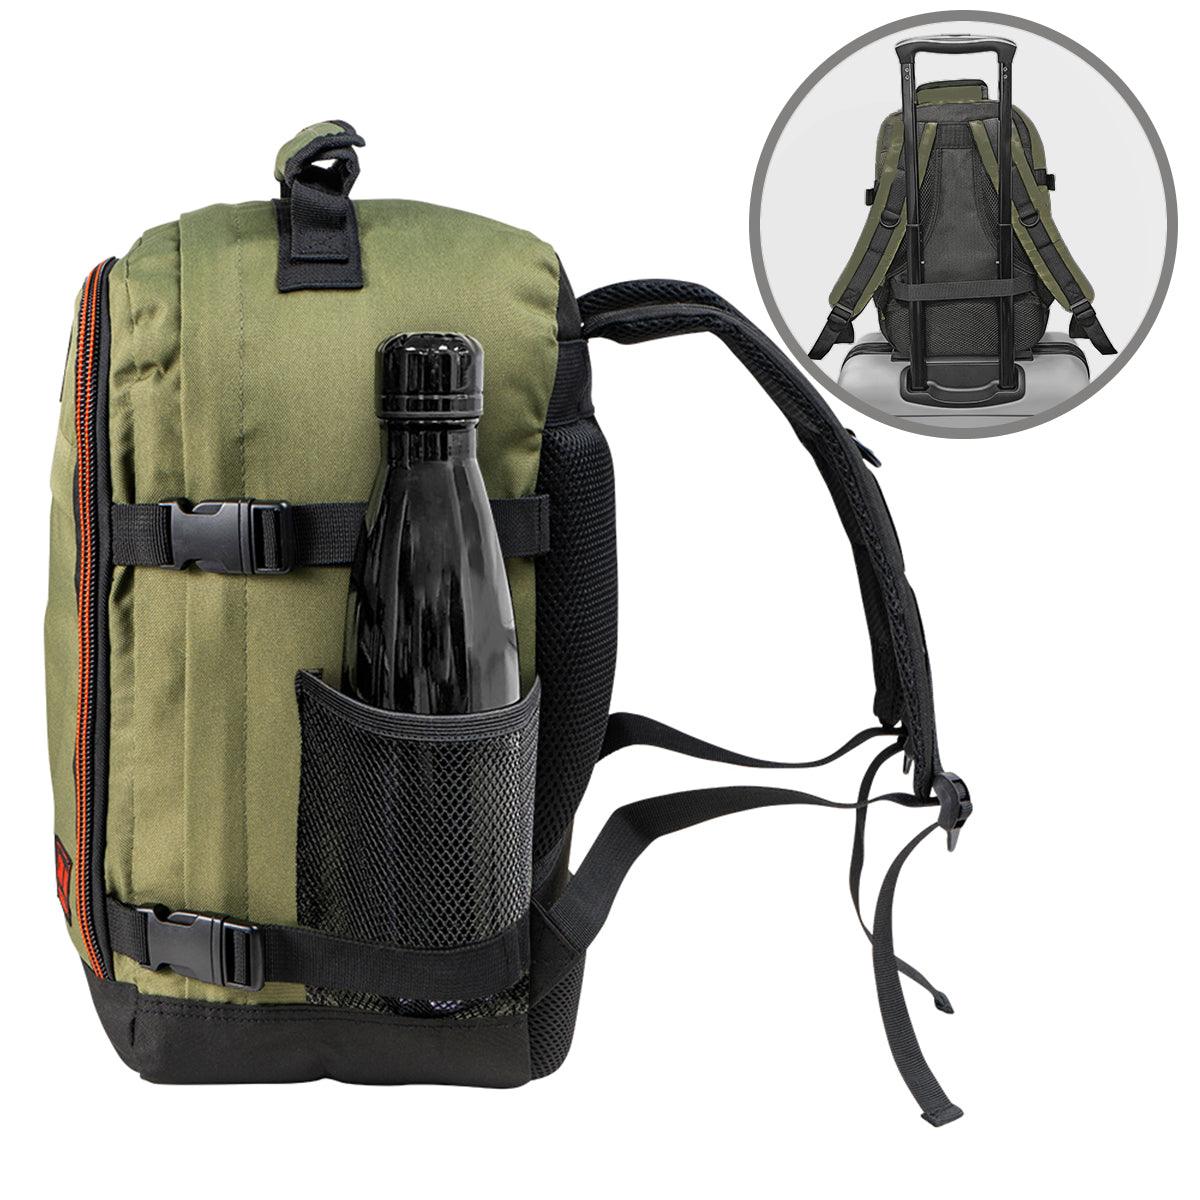 Metz 20L RPET ♻️ Backpack - 40x20x25 cm – Cabin Max